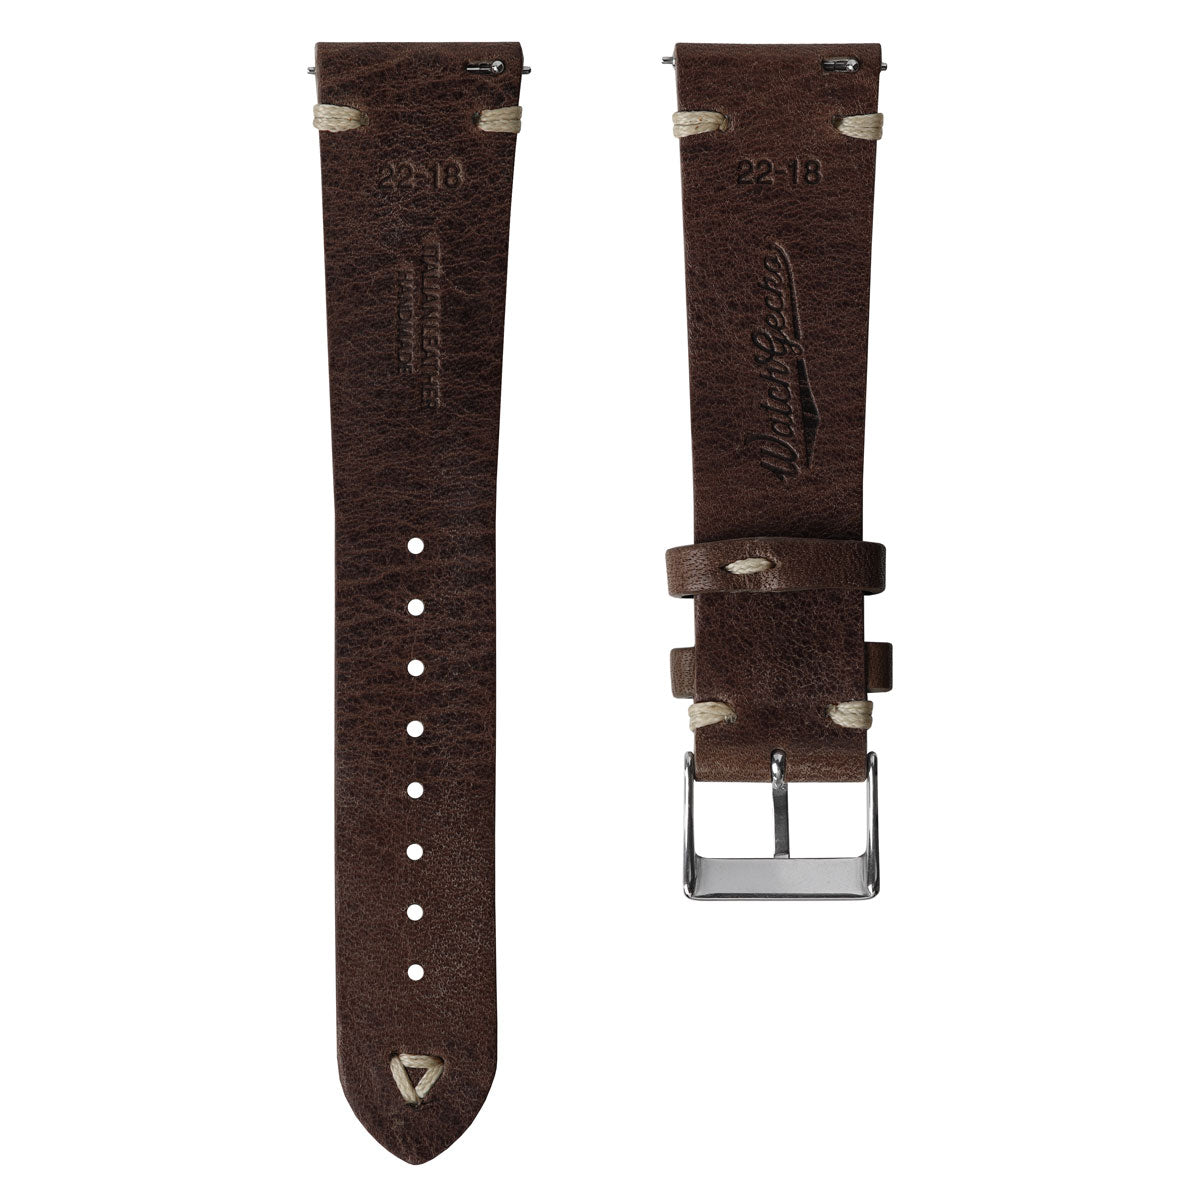 Classic Simple Handmade Italian Leather Watch Strap - Chocolate Brown